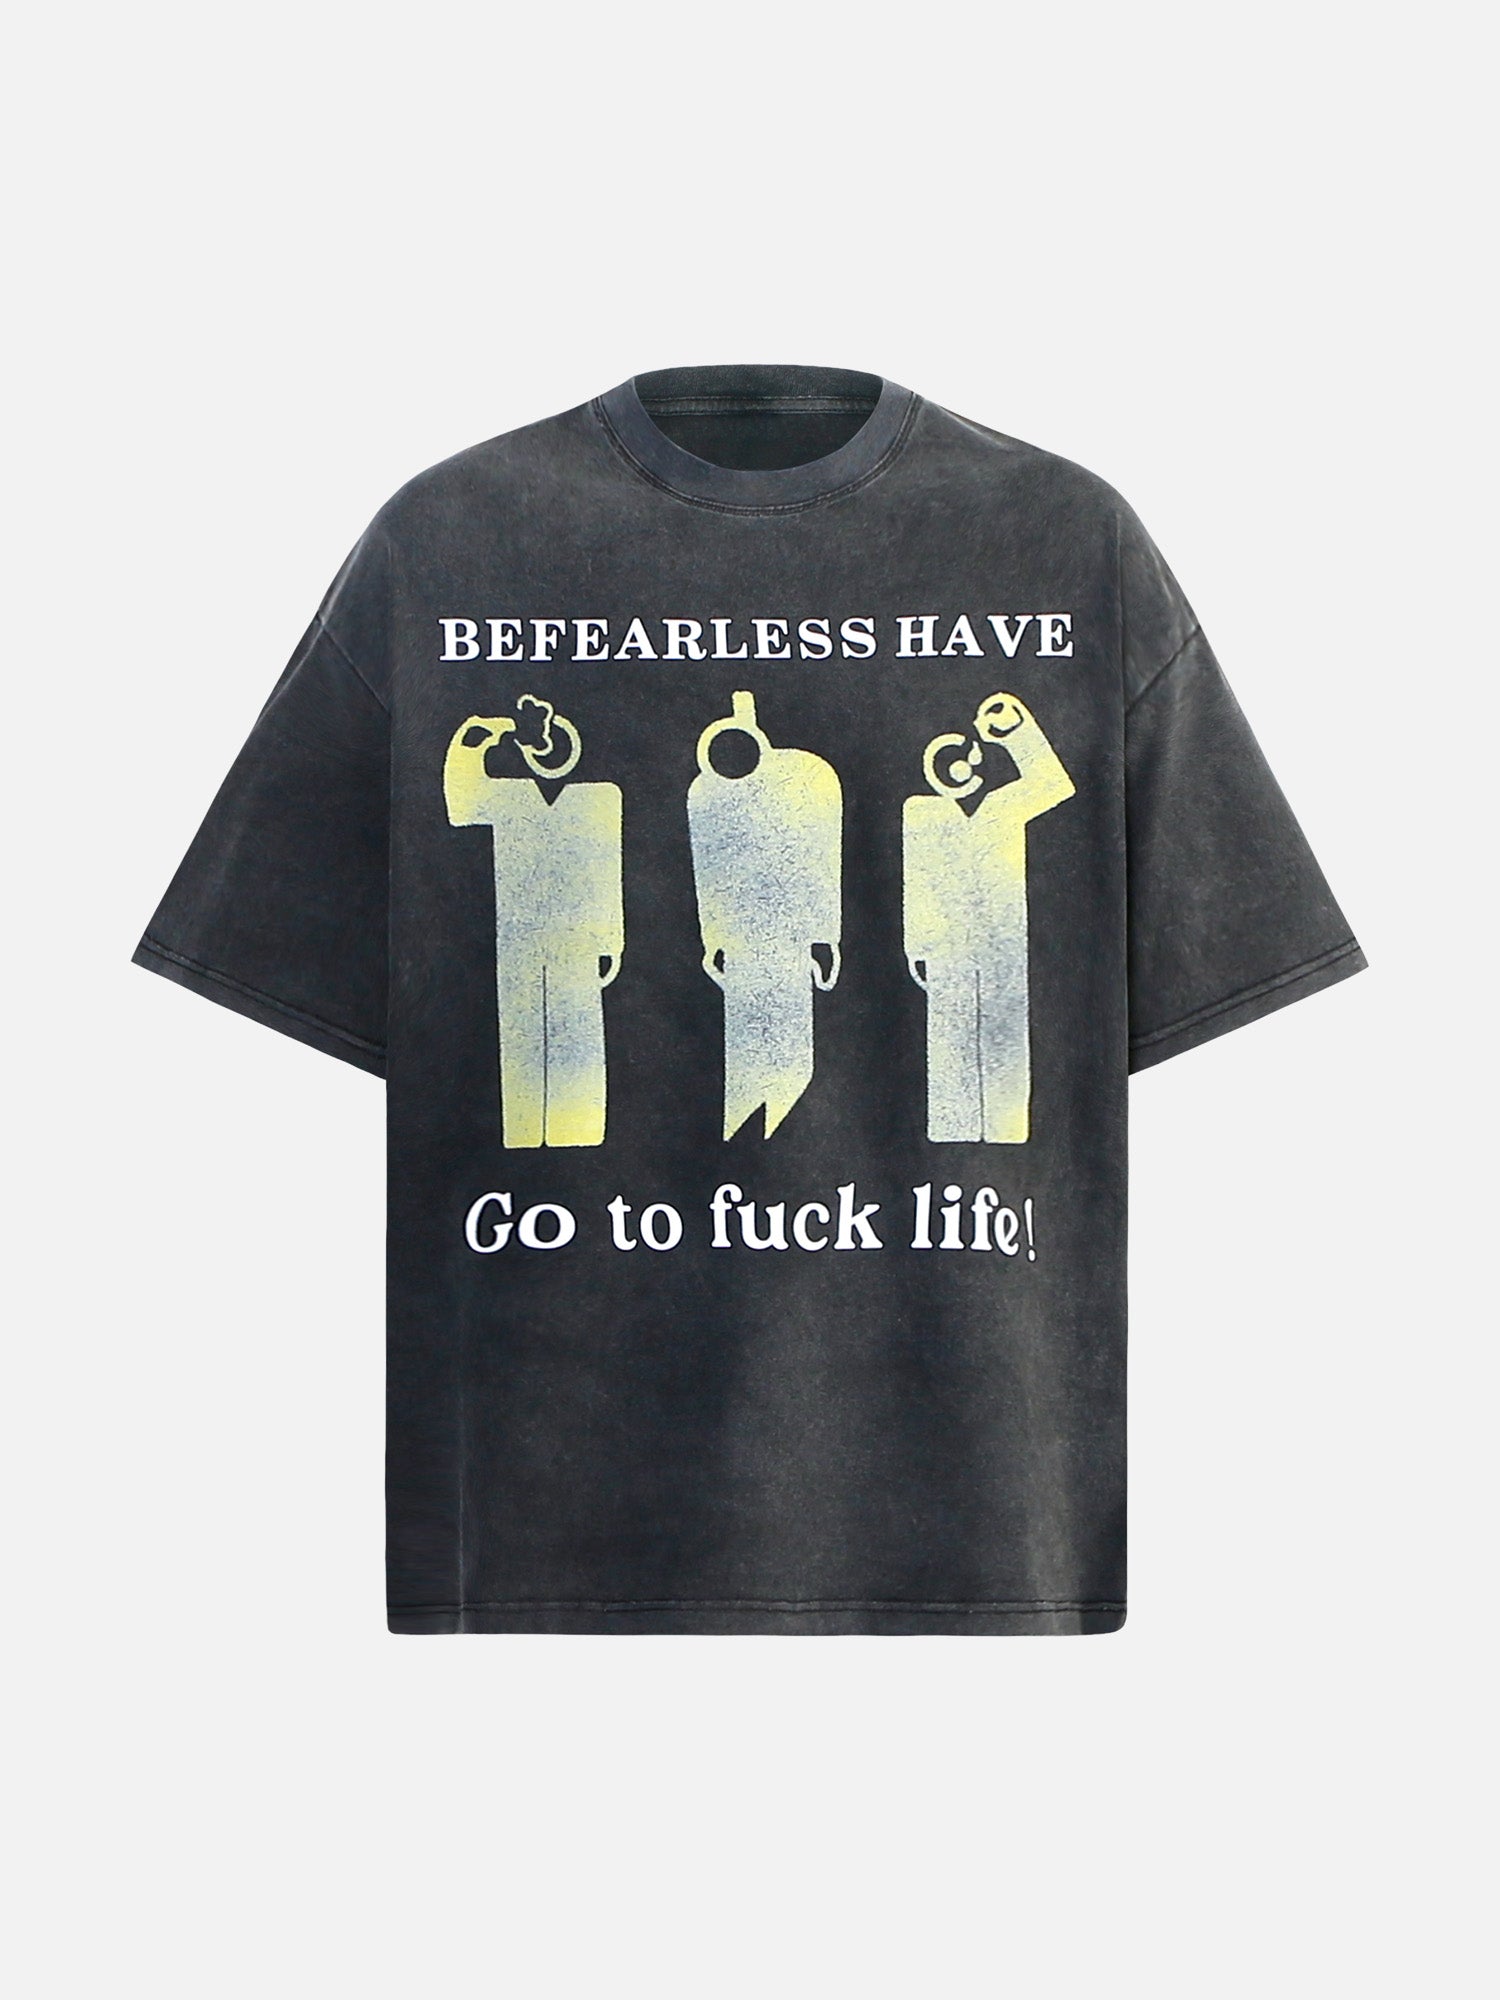 Thesupermade American Street Fashion Washed Fun Printed T-Shirt